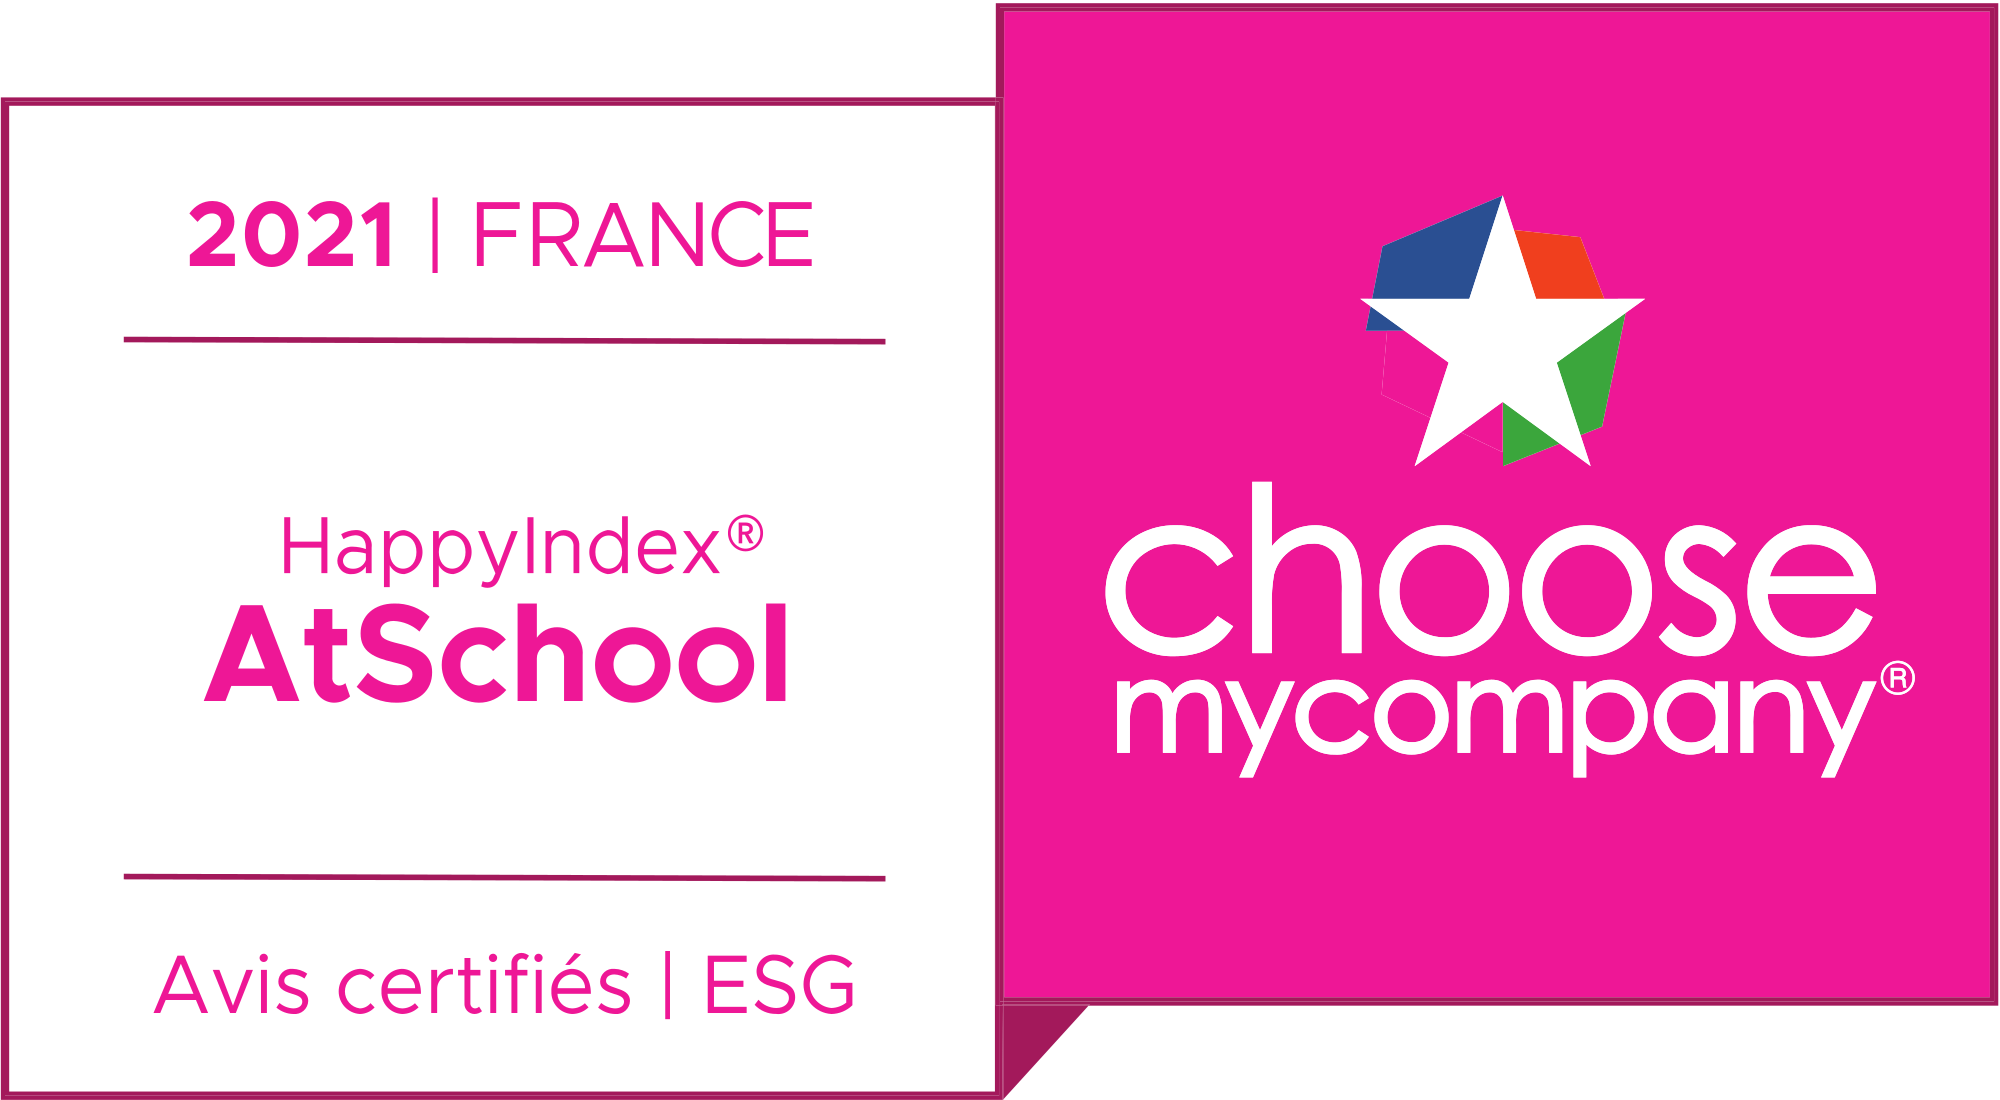 Logo HappyIndex®AtSchool | France 2021